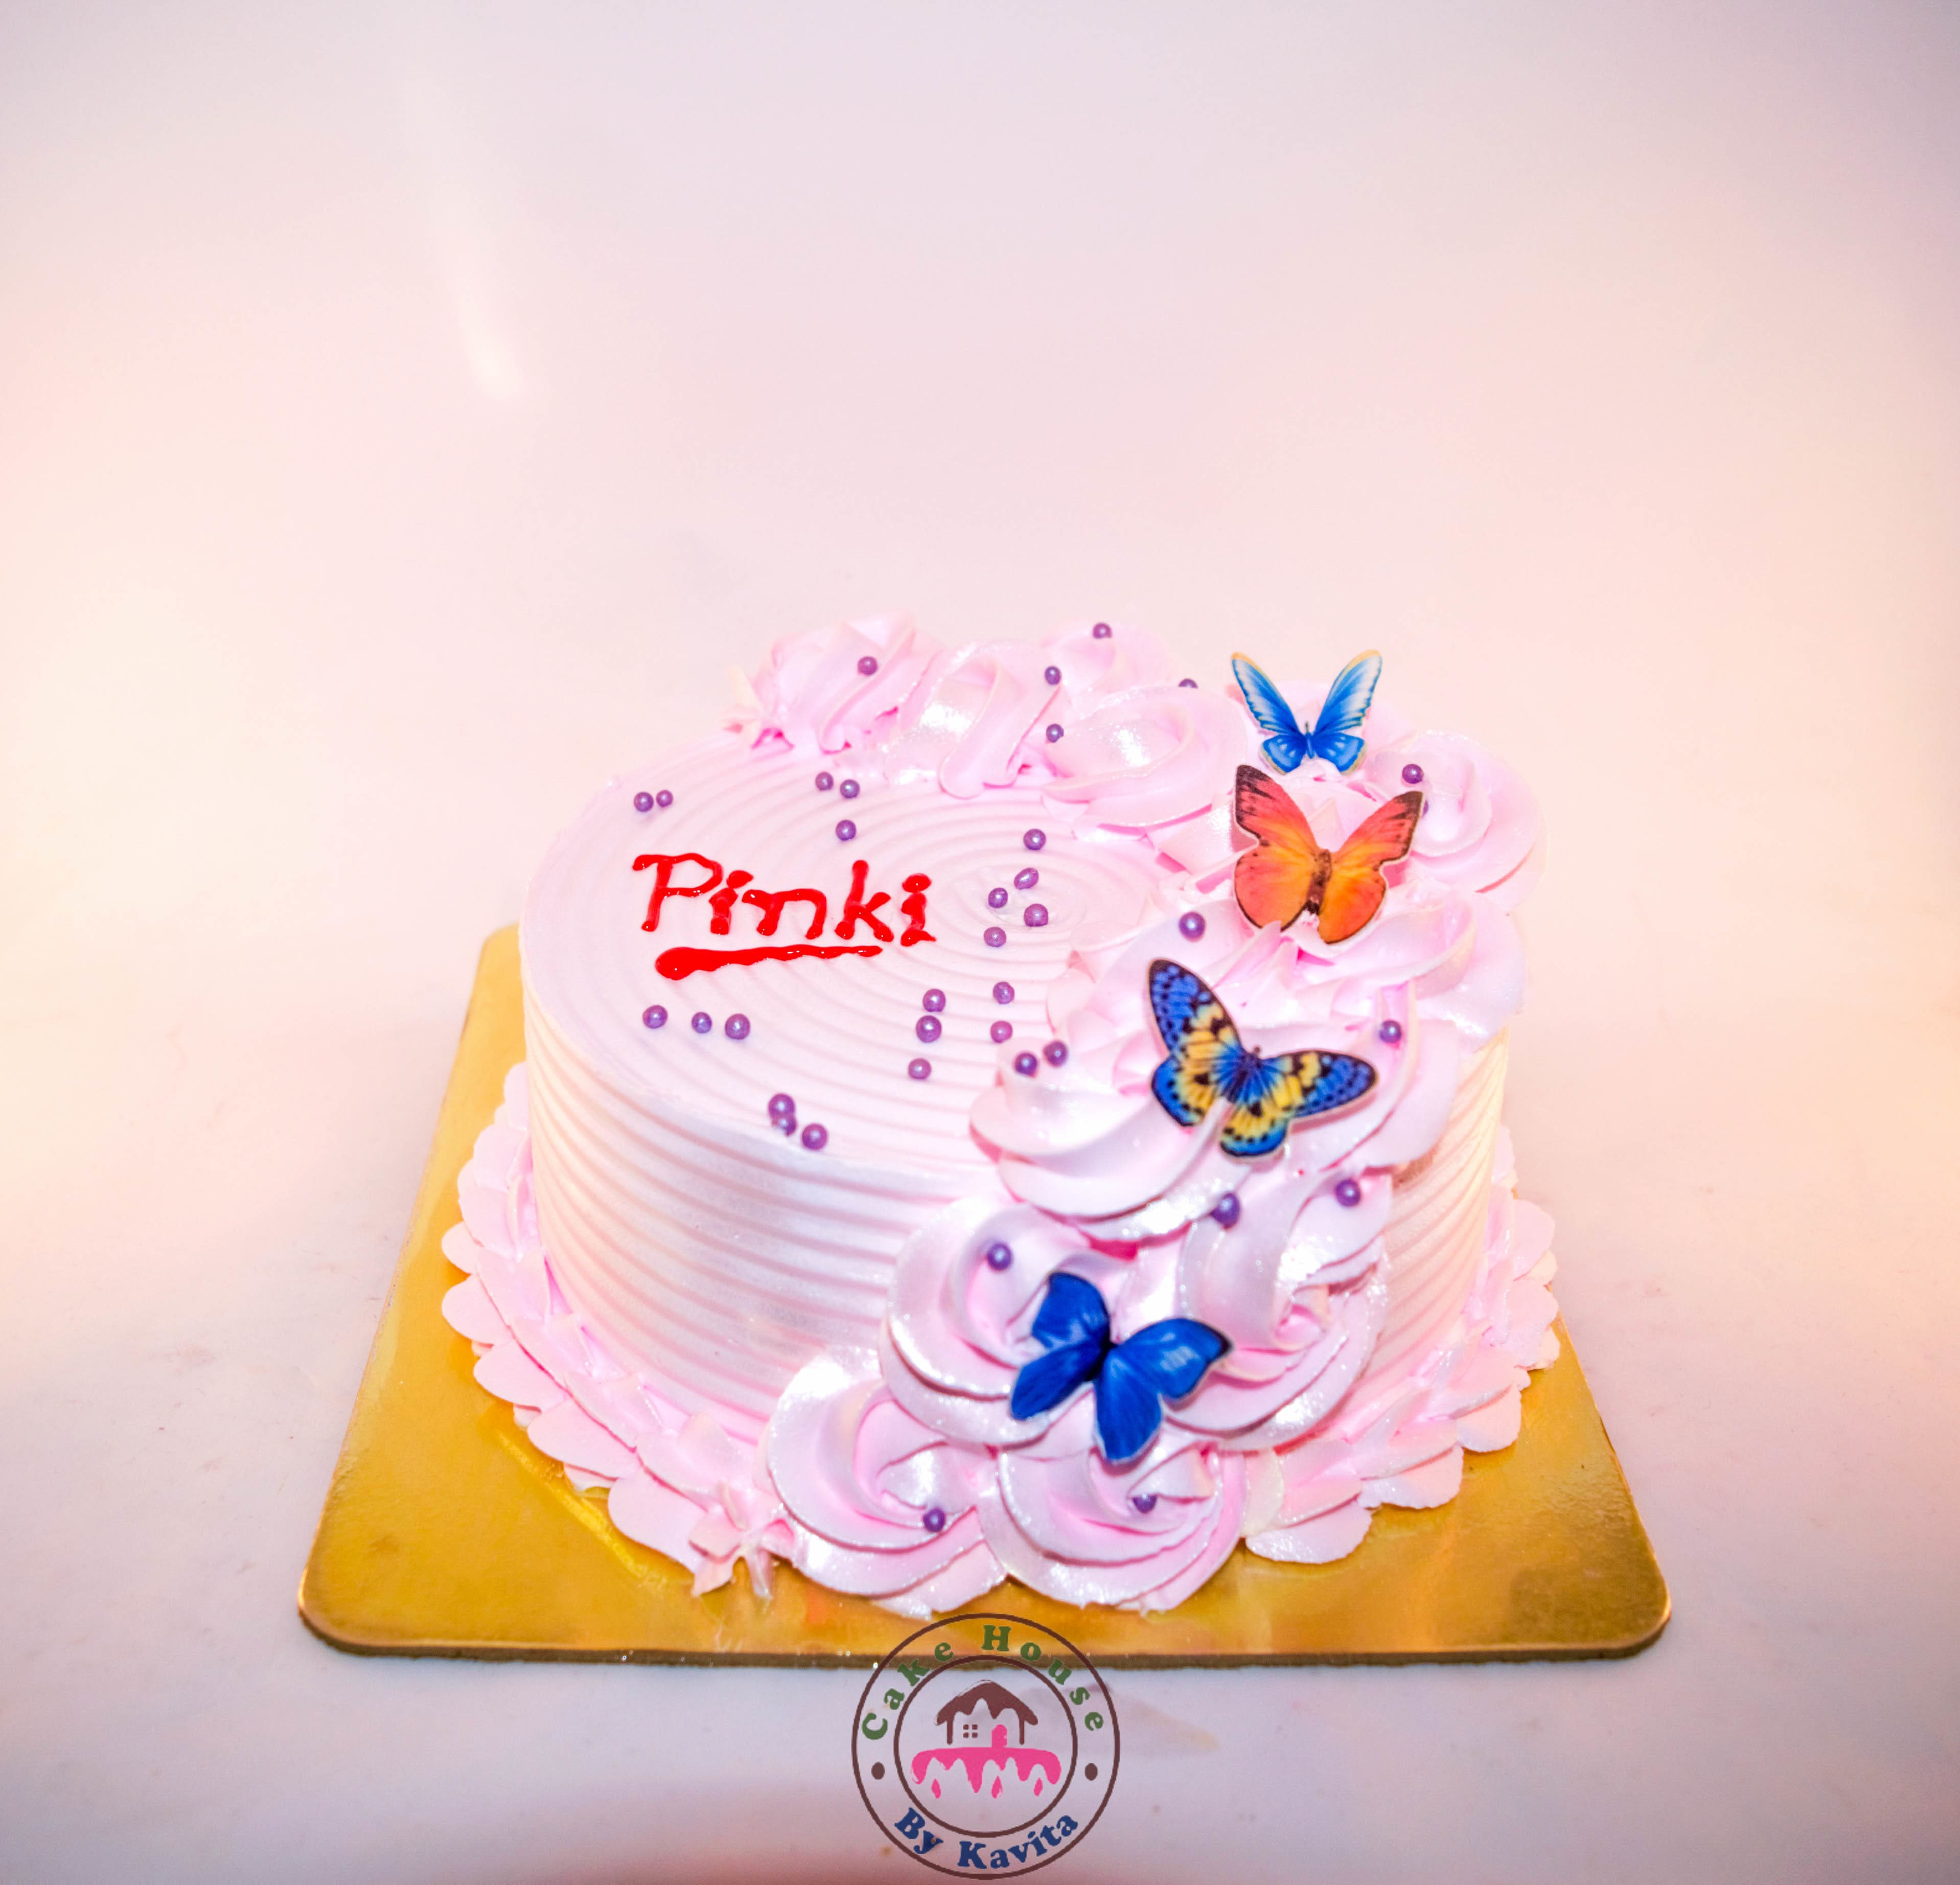 Happy Birthday pinky Cake Images